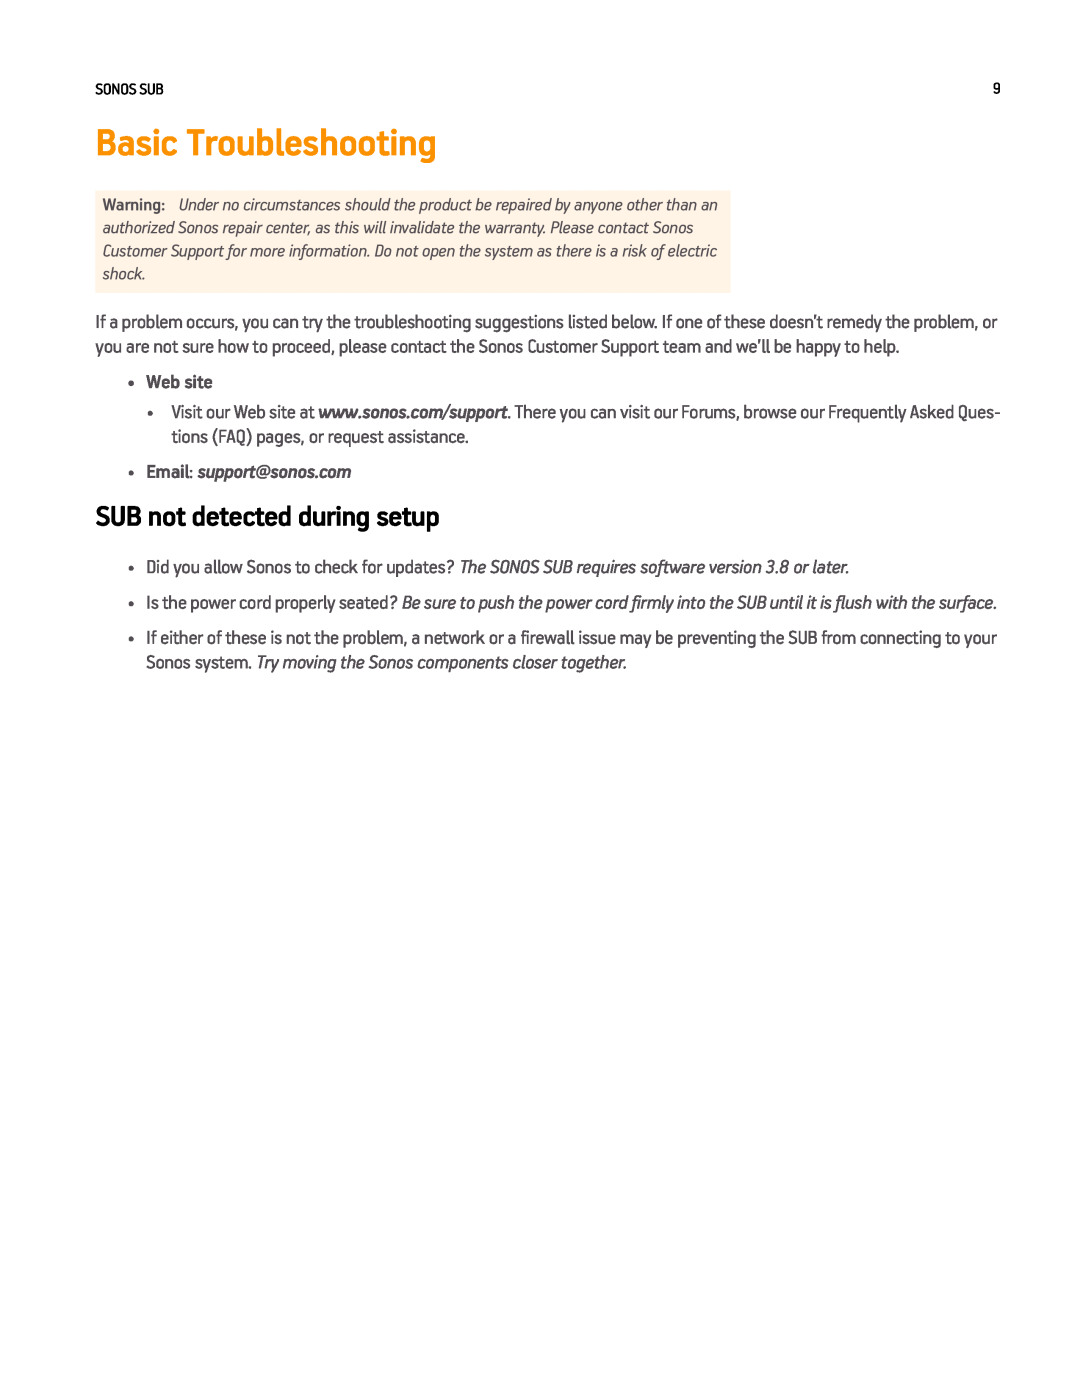 Sonos Q2 manual Basic Troubleshooting, SUB not detected during setup 